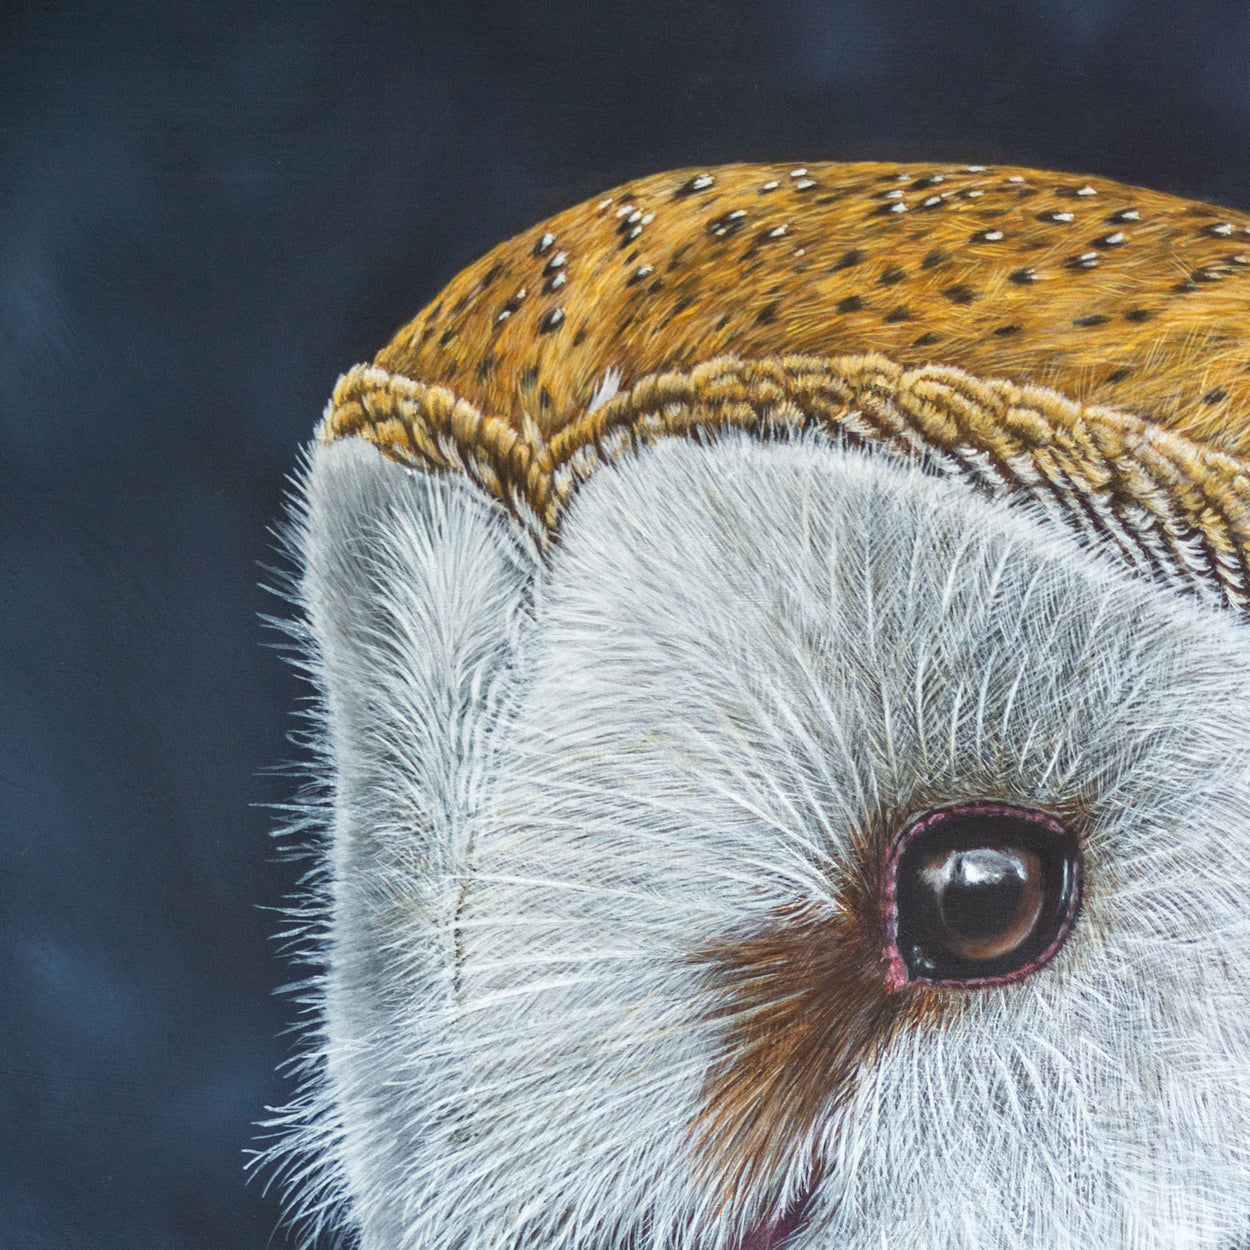 Barn Owl portrait Painting Close-up 3 - Jill Dimond